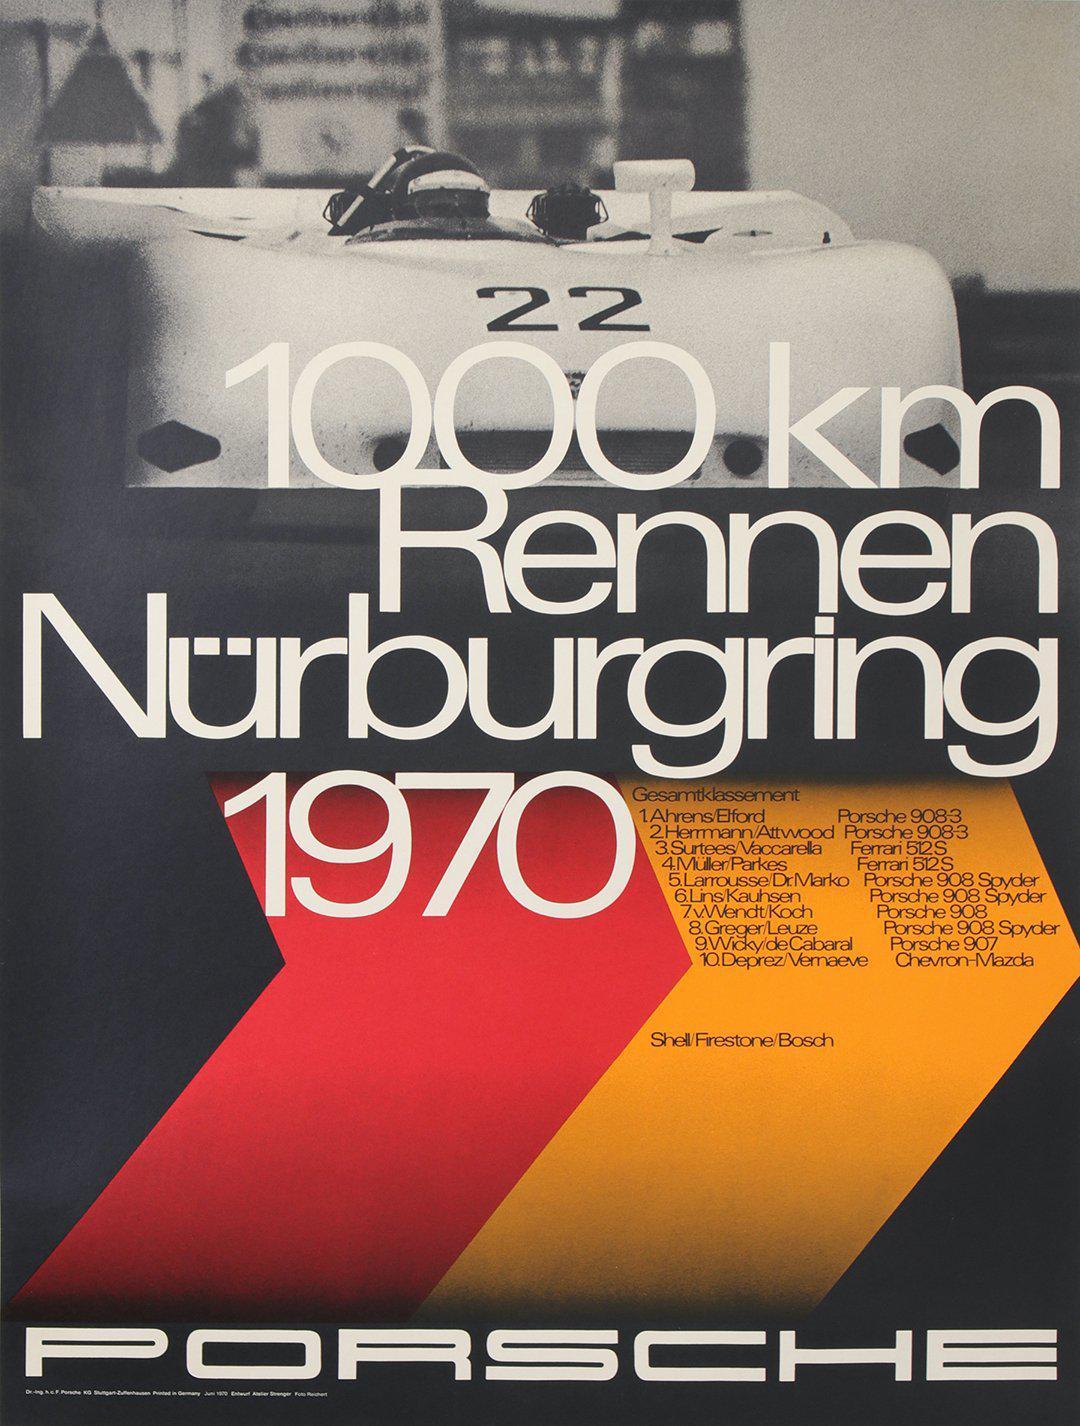 Original Vintage Porsche Car Race Poster Nurburgring German Grand Prix 1970 Ahrens Elford Formula One